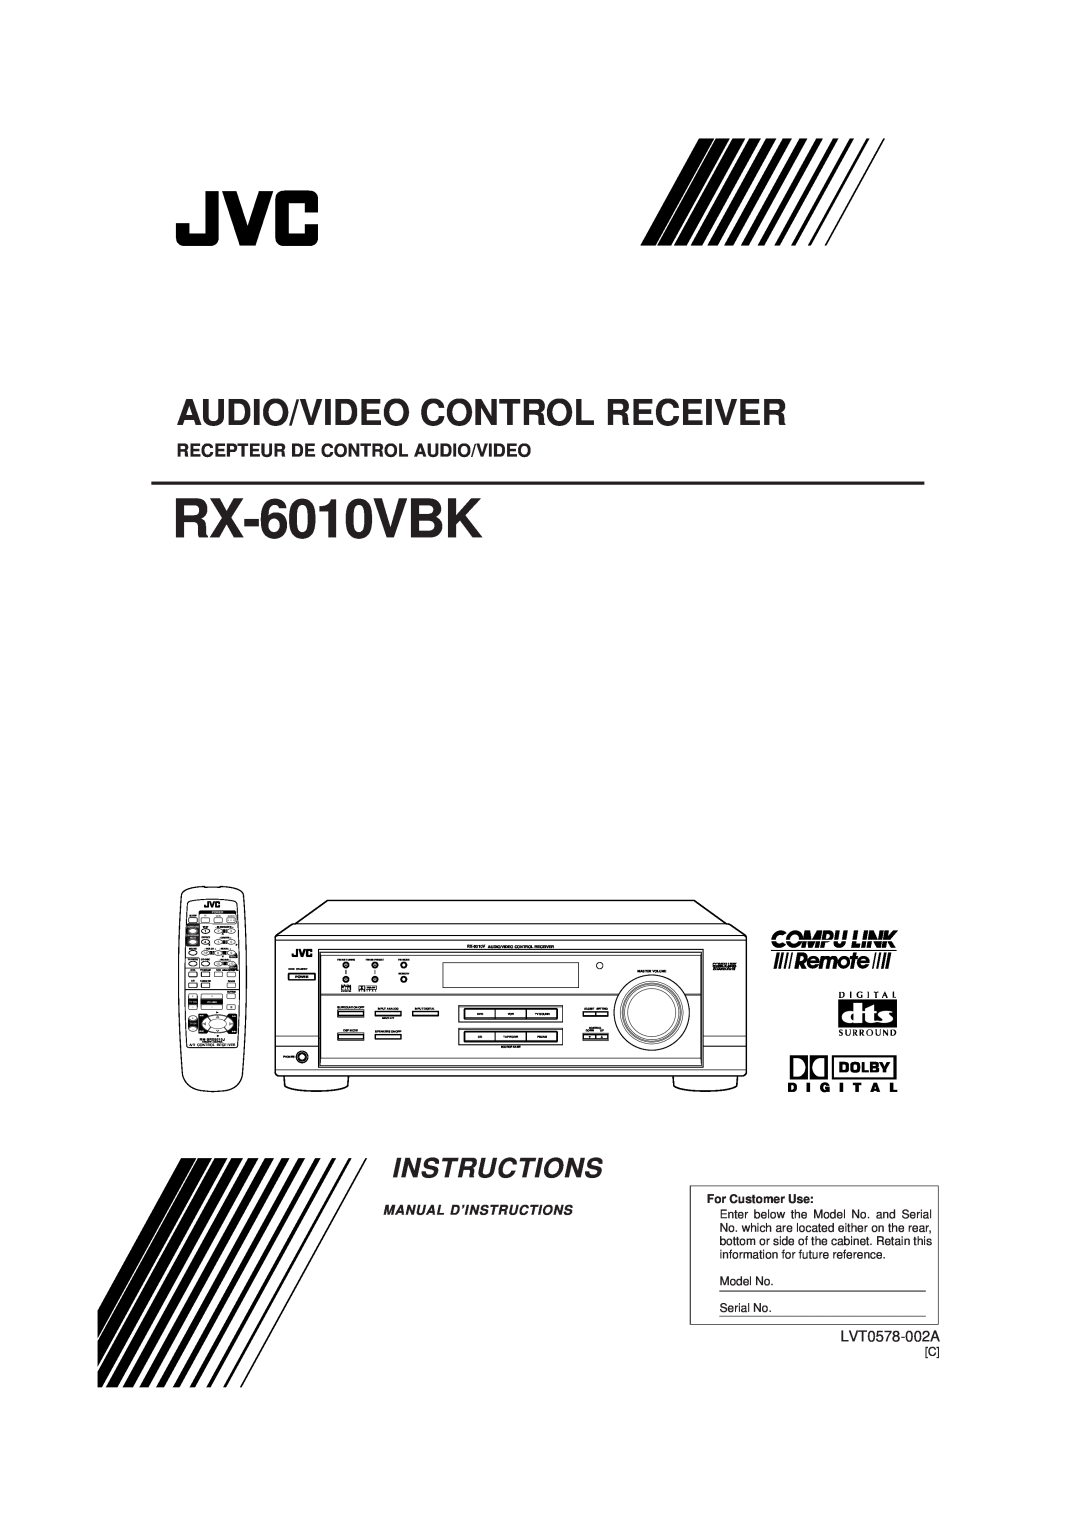 JVC RX-6010VBK manual Recepteur De Control Audio/Video, Audio/Video Control Receiver, Instructions, LVT0578-002A, Power 